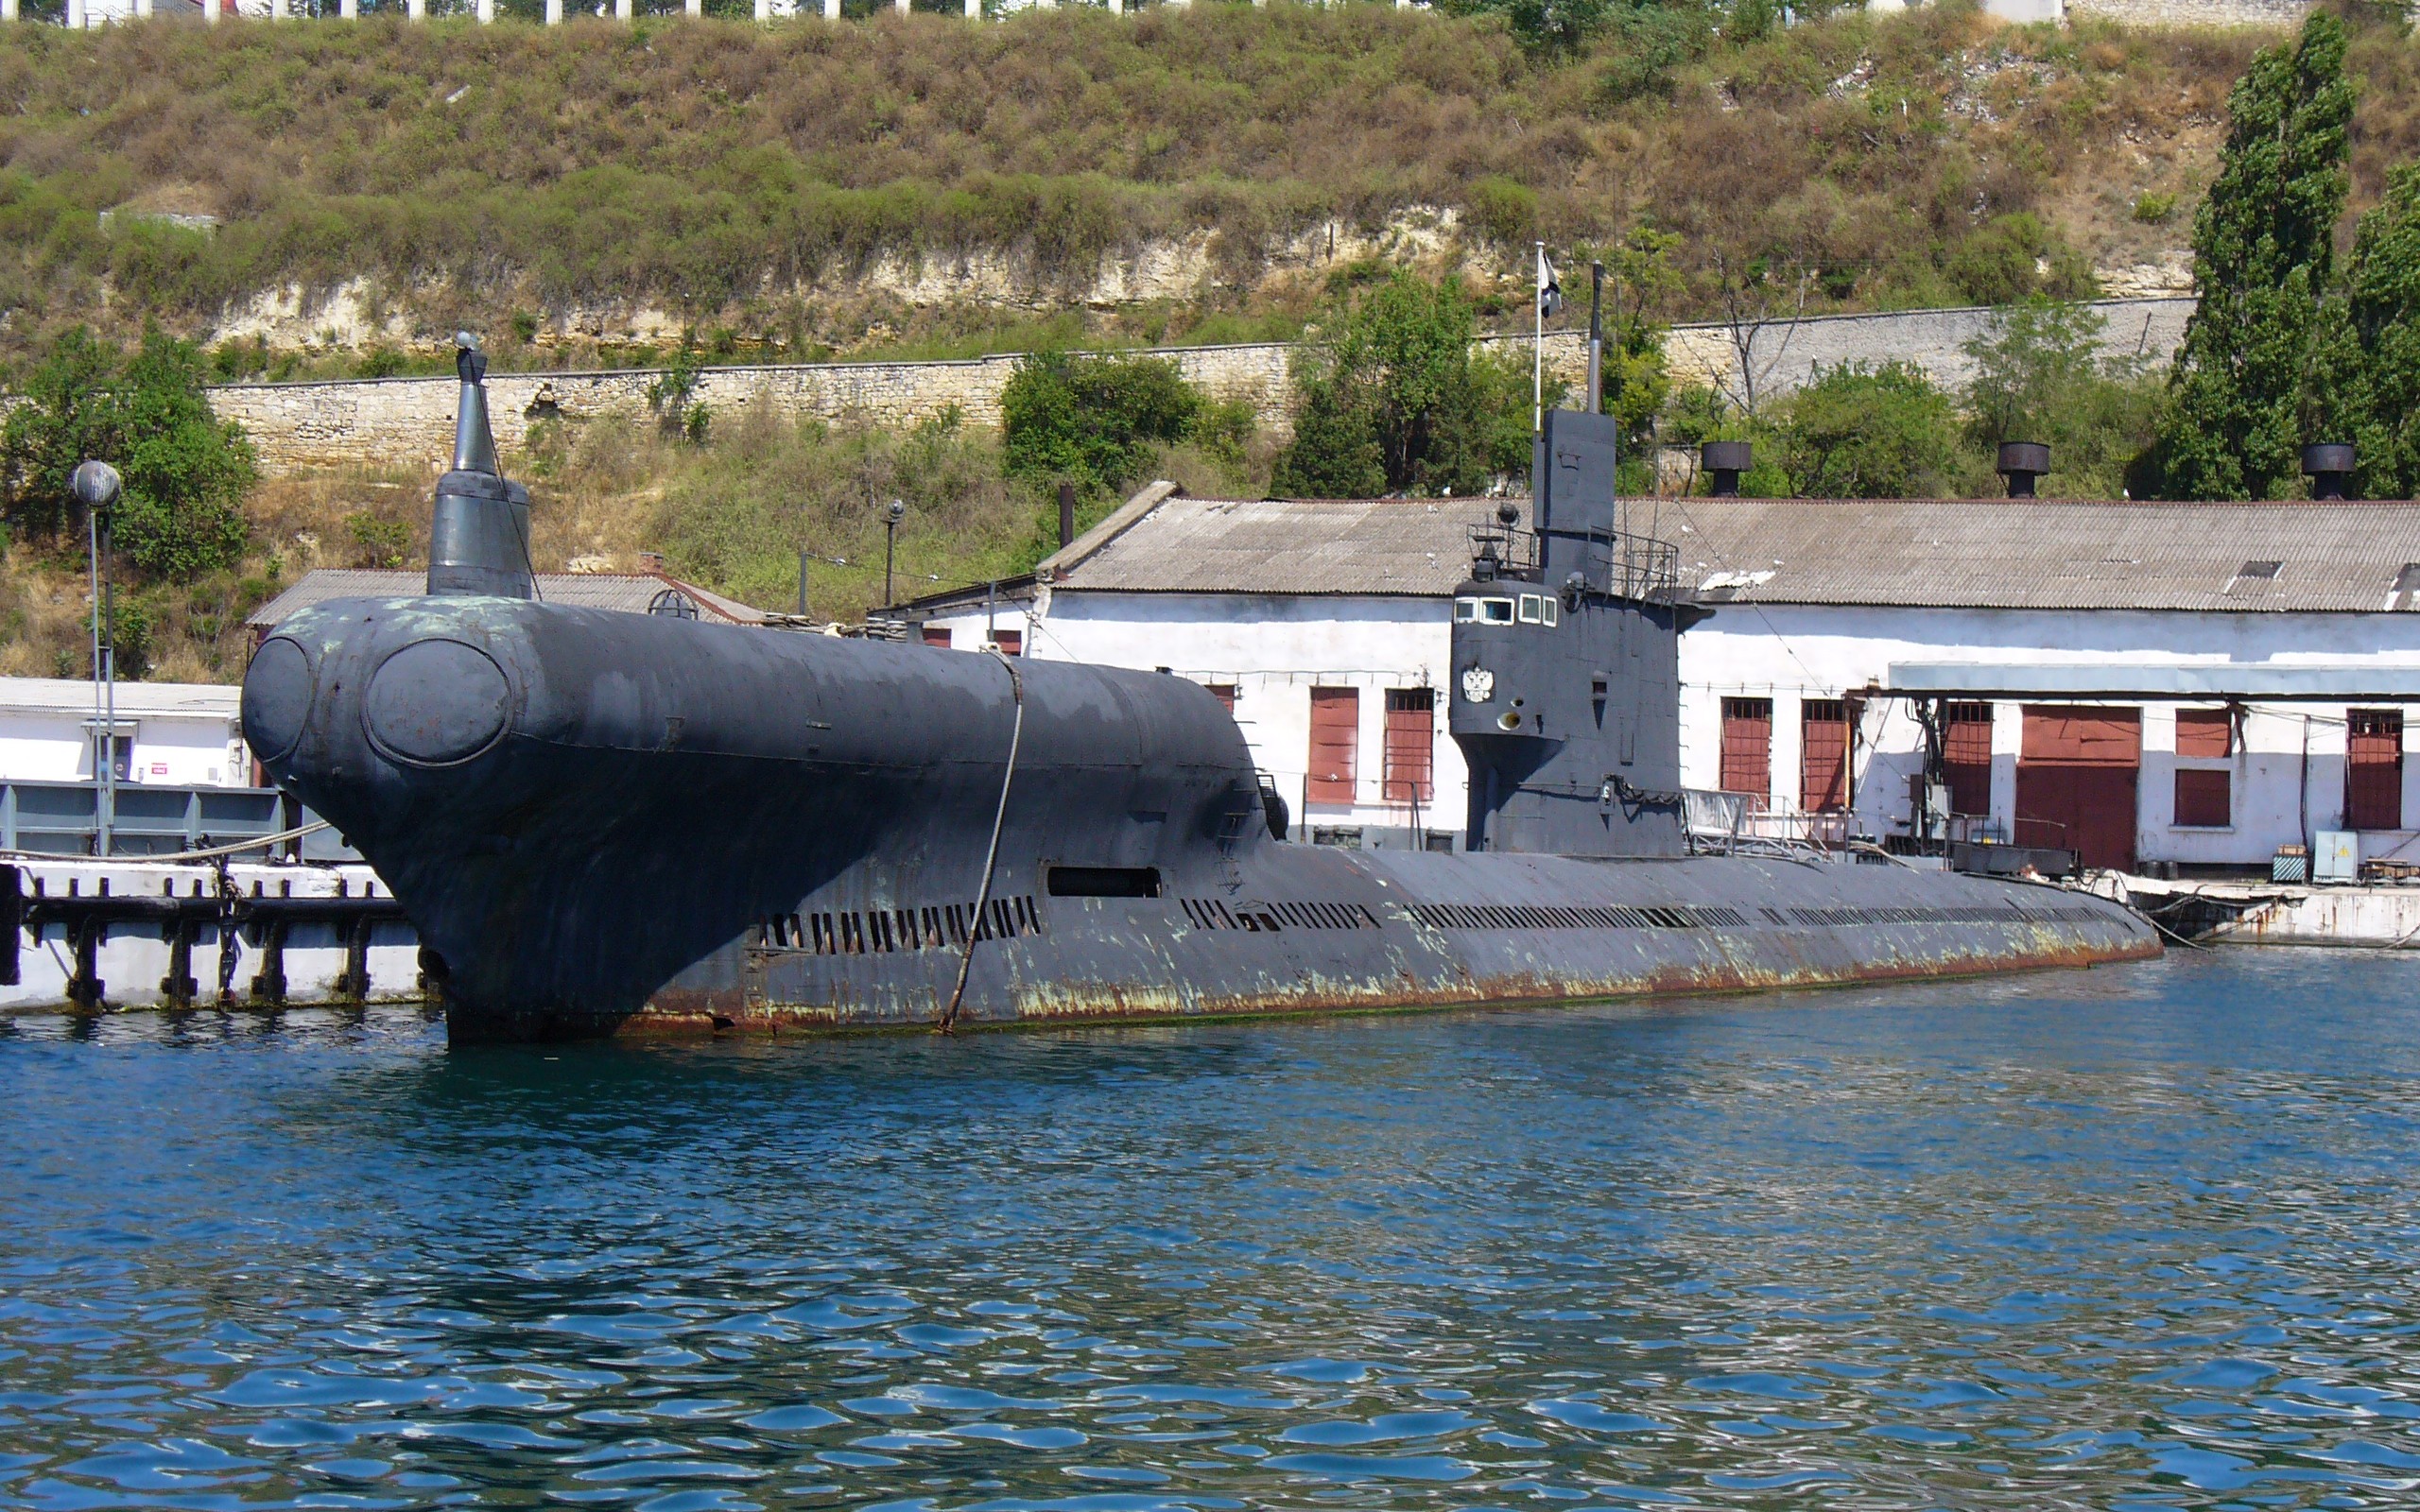 General 2560x1600 USSR military vehicle submarine military vehicle